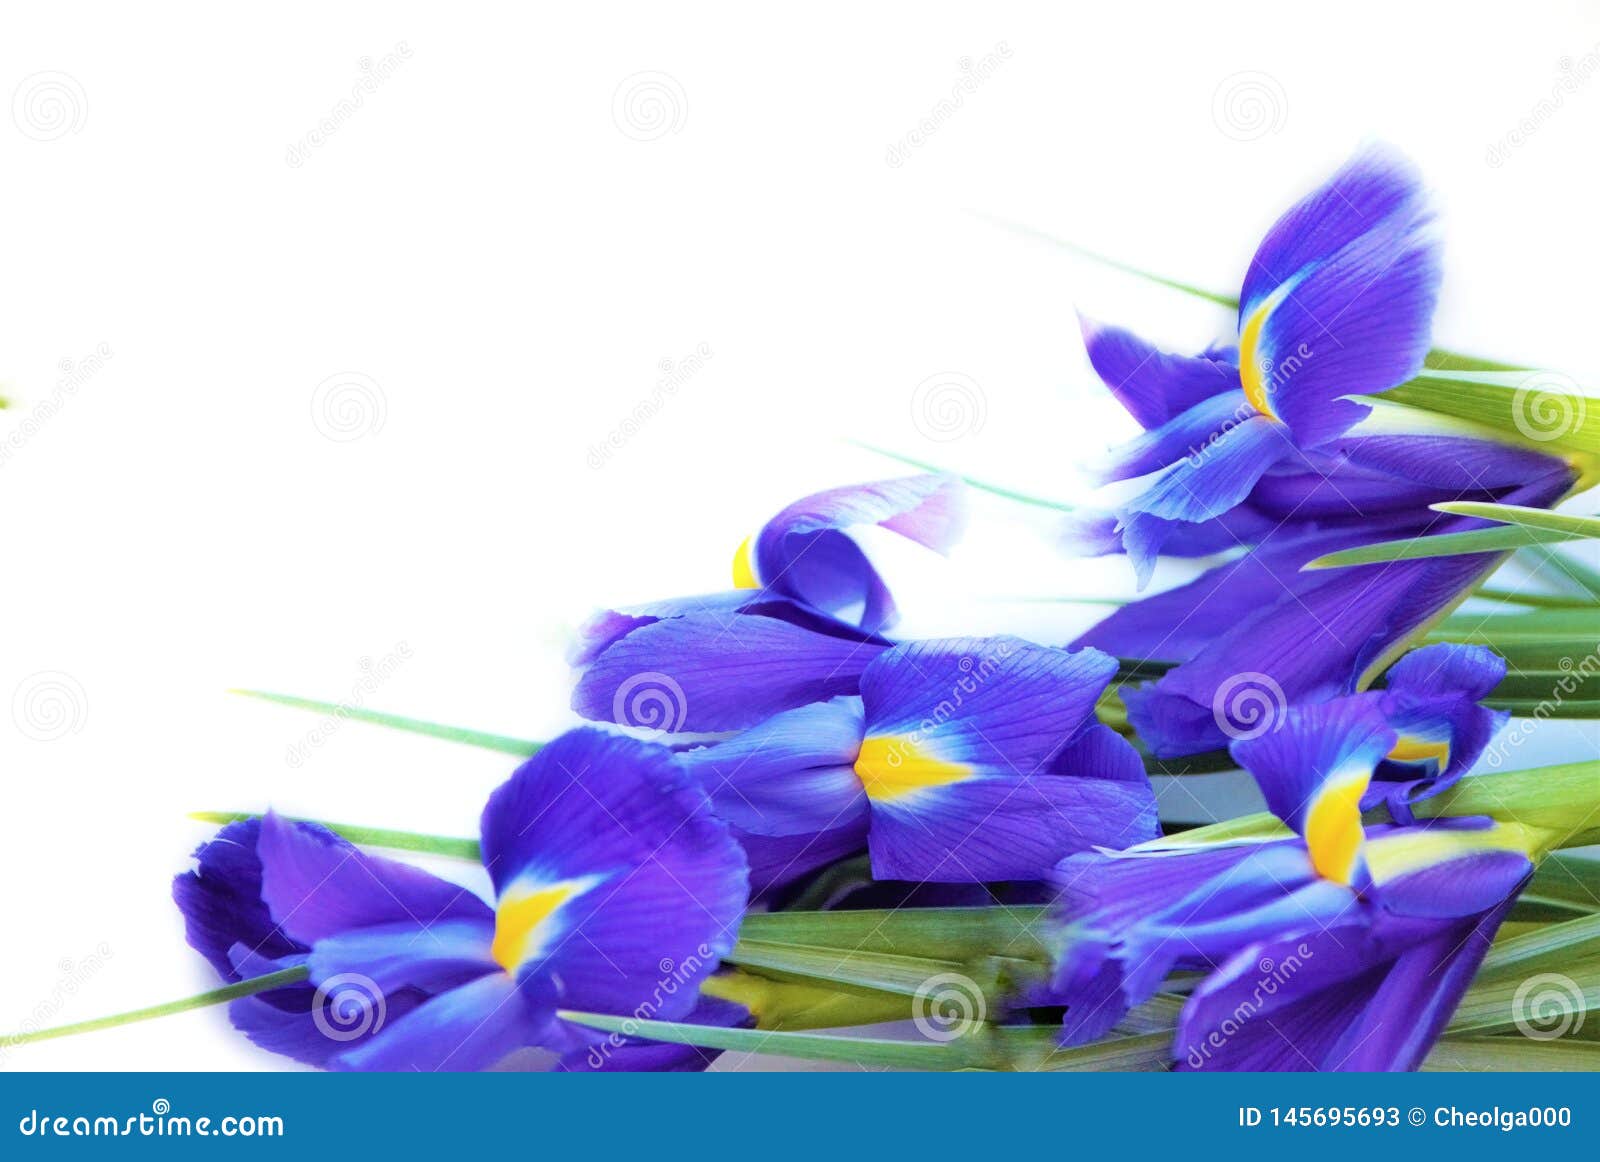 Purple flowers of irises stock image. Image of card - 145695693